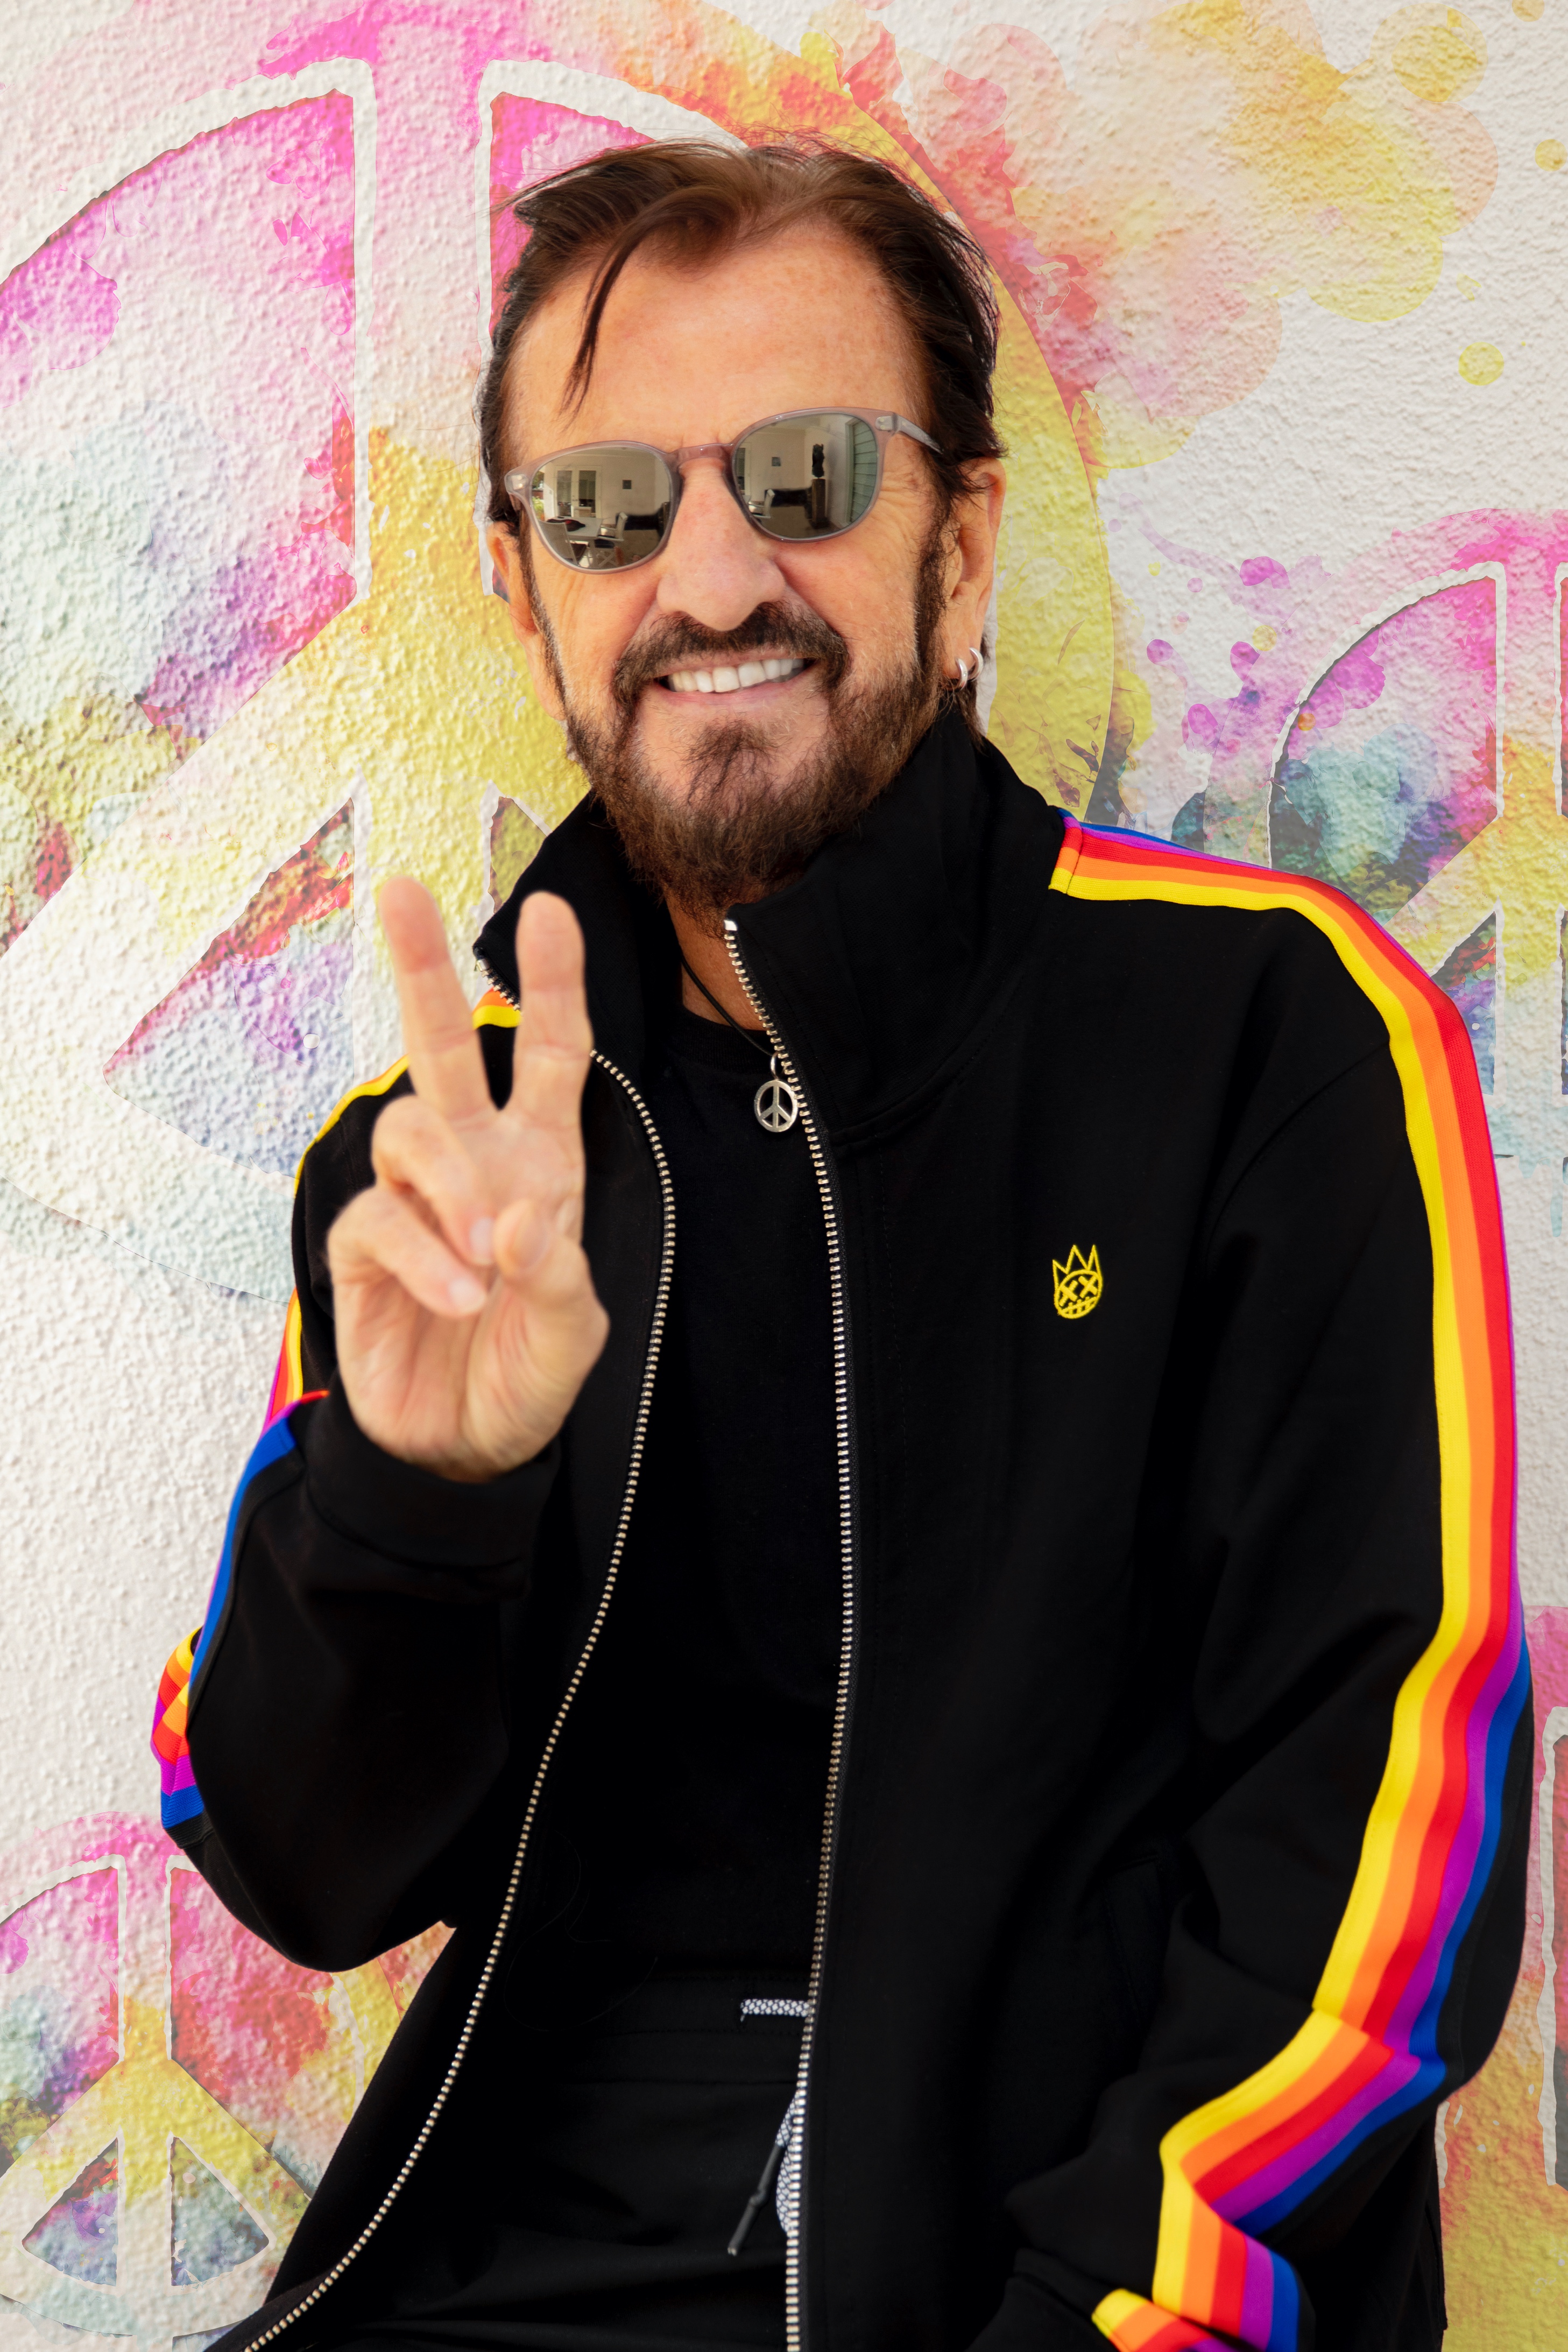 Sir Ringo Starr